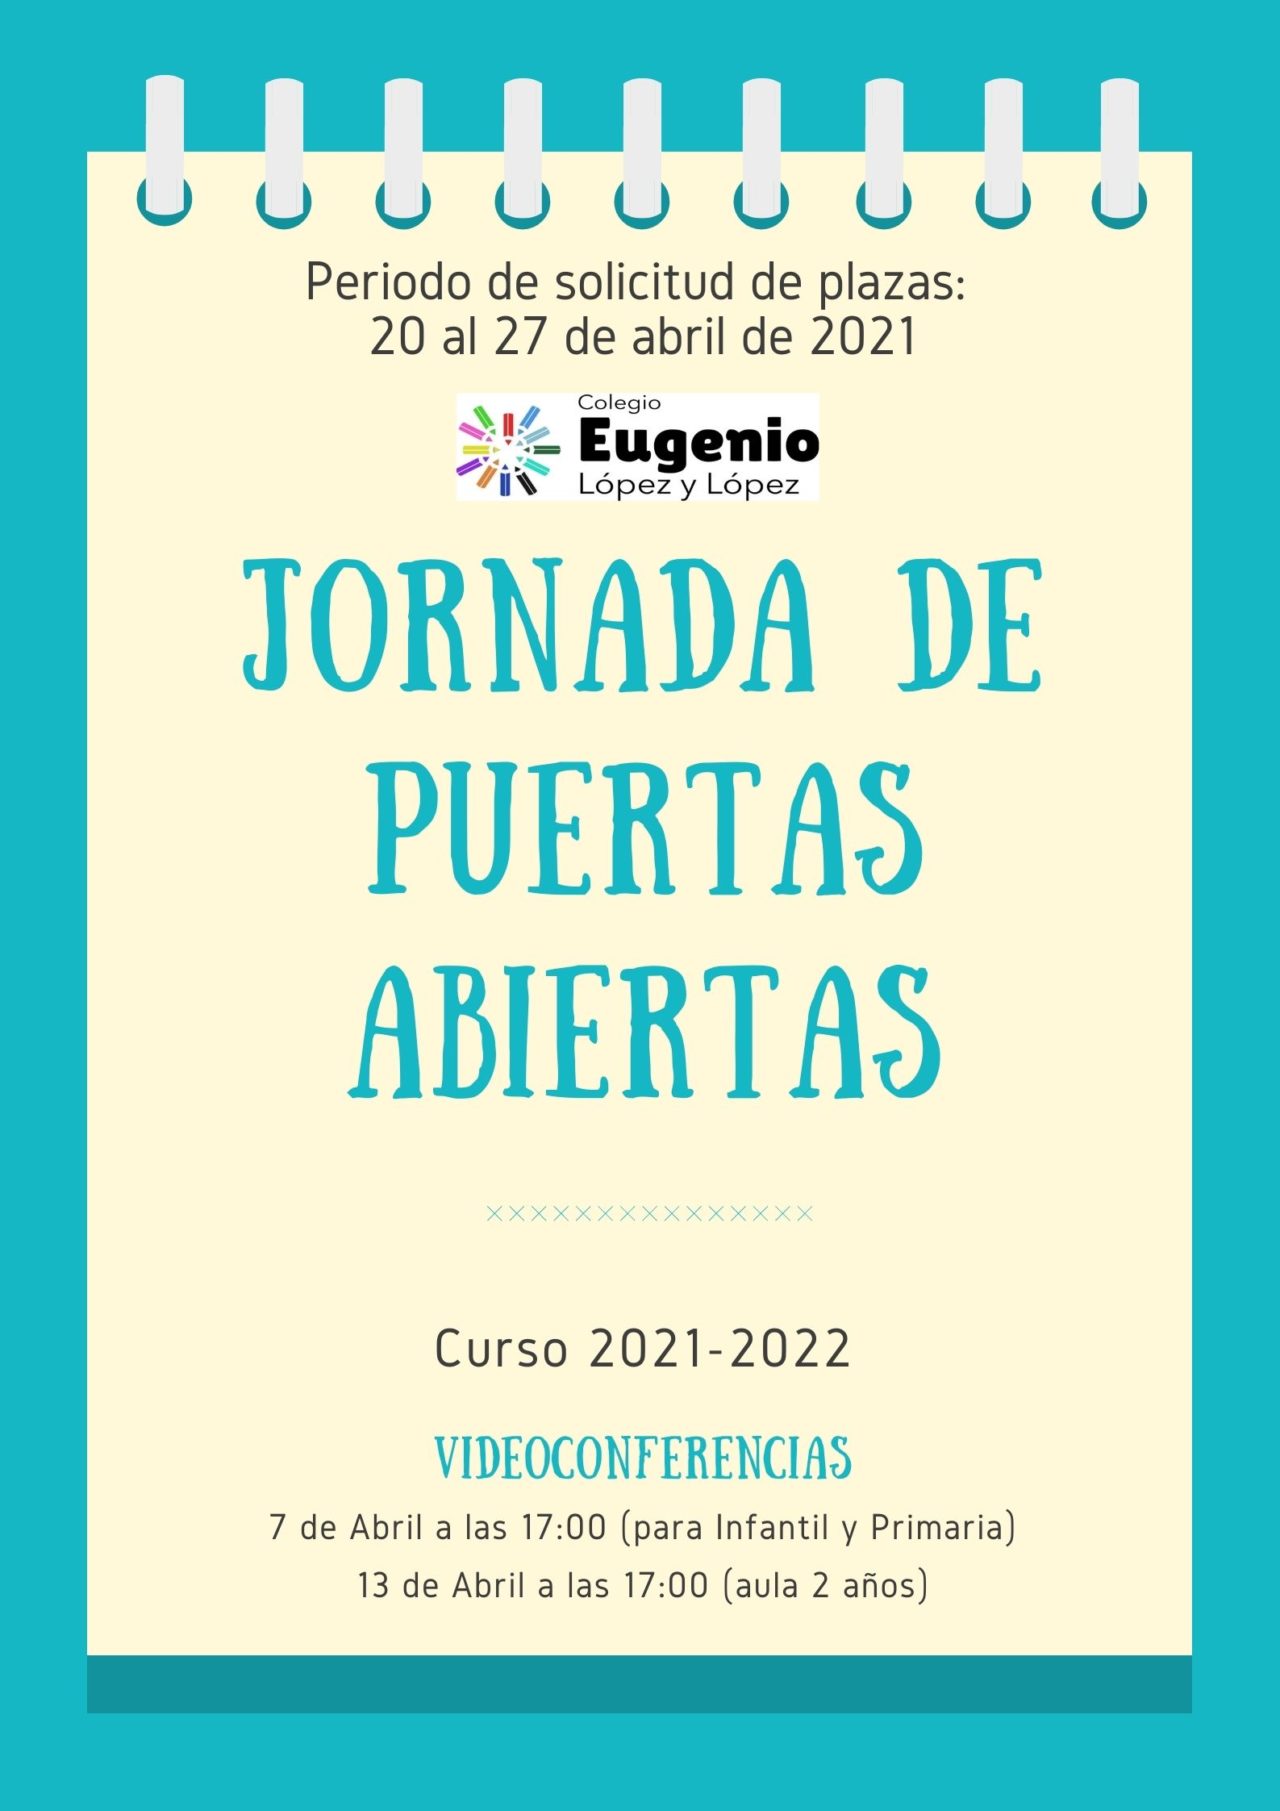 https://colegioeugeniolopezylopez.es/wp-content/uploads/2021/03/Jornada-de-Puertas-Abiertas-1-1280x1811.jpg